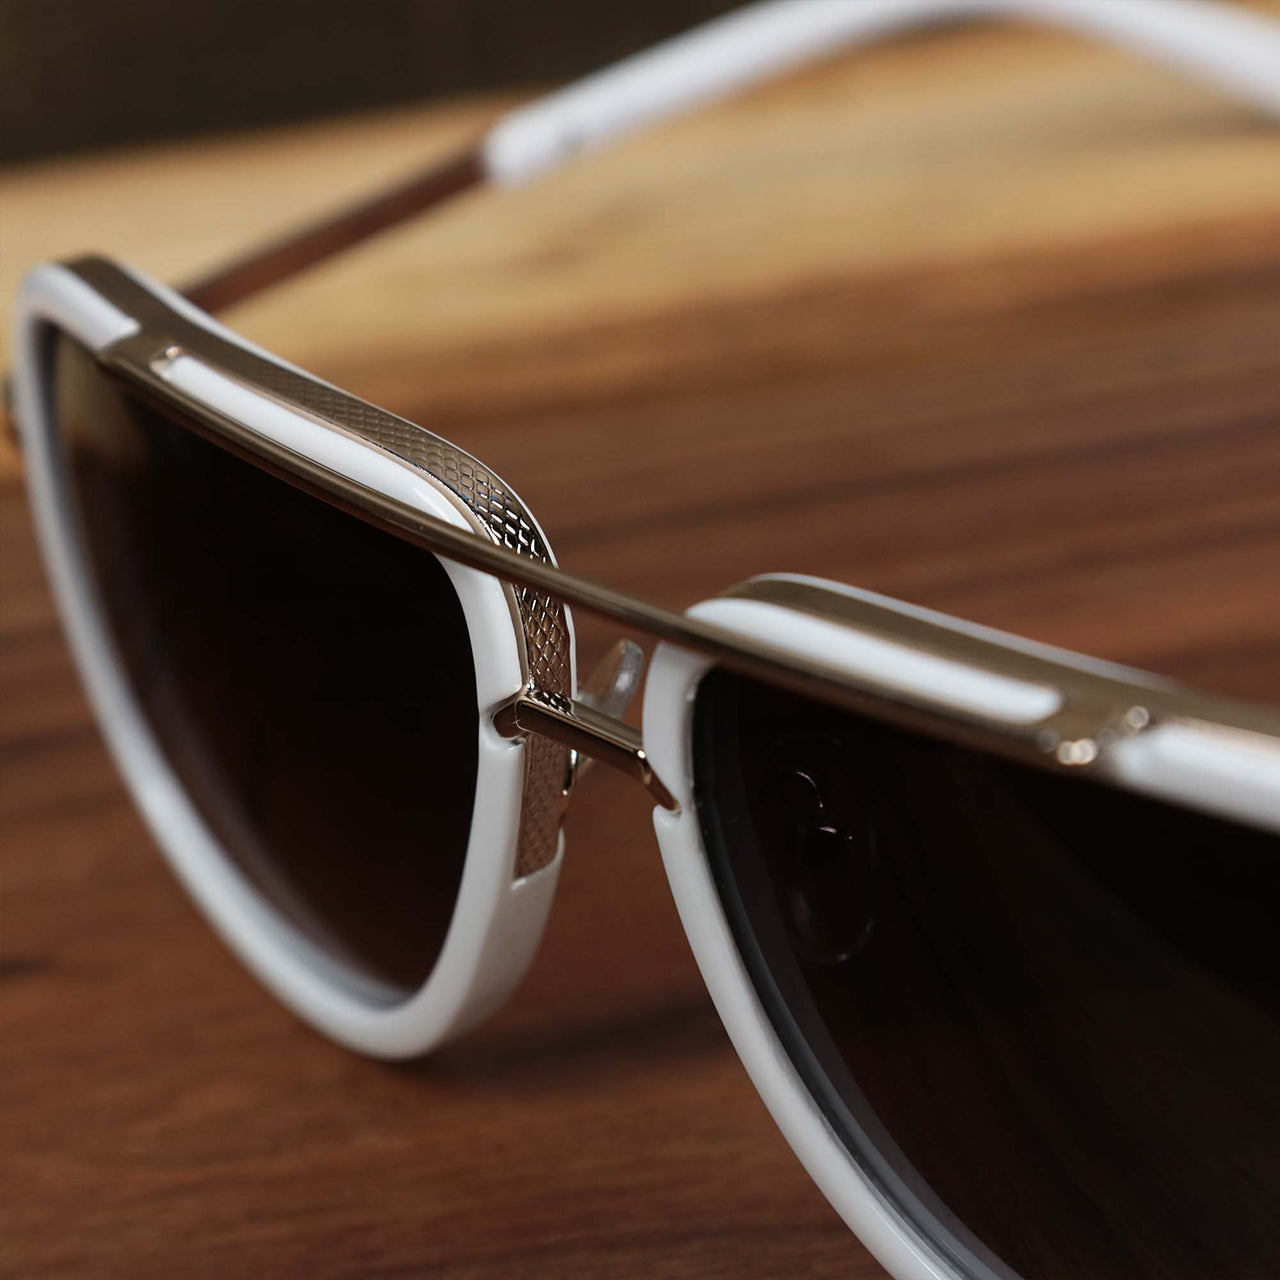 The bridge on the Round Frame Black Lens Luxury Sunglasses with White Gold Frame